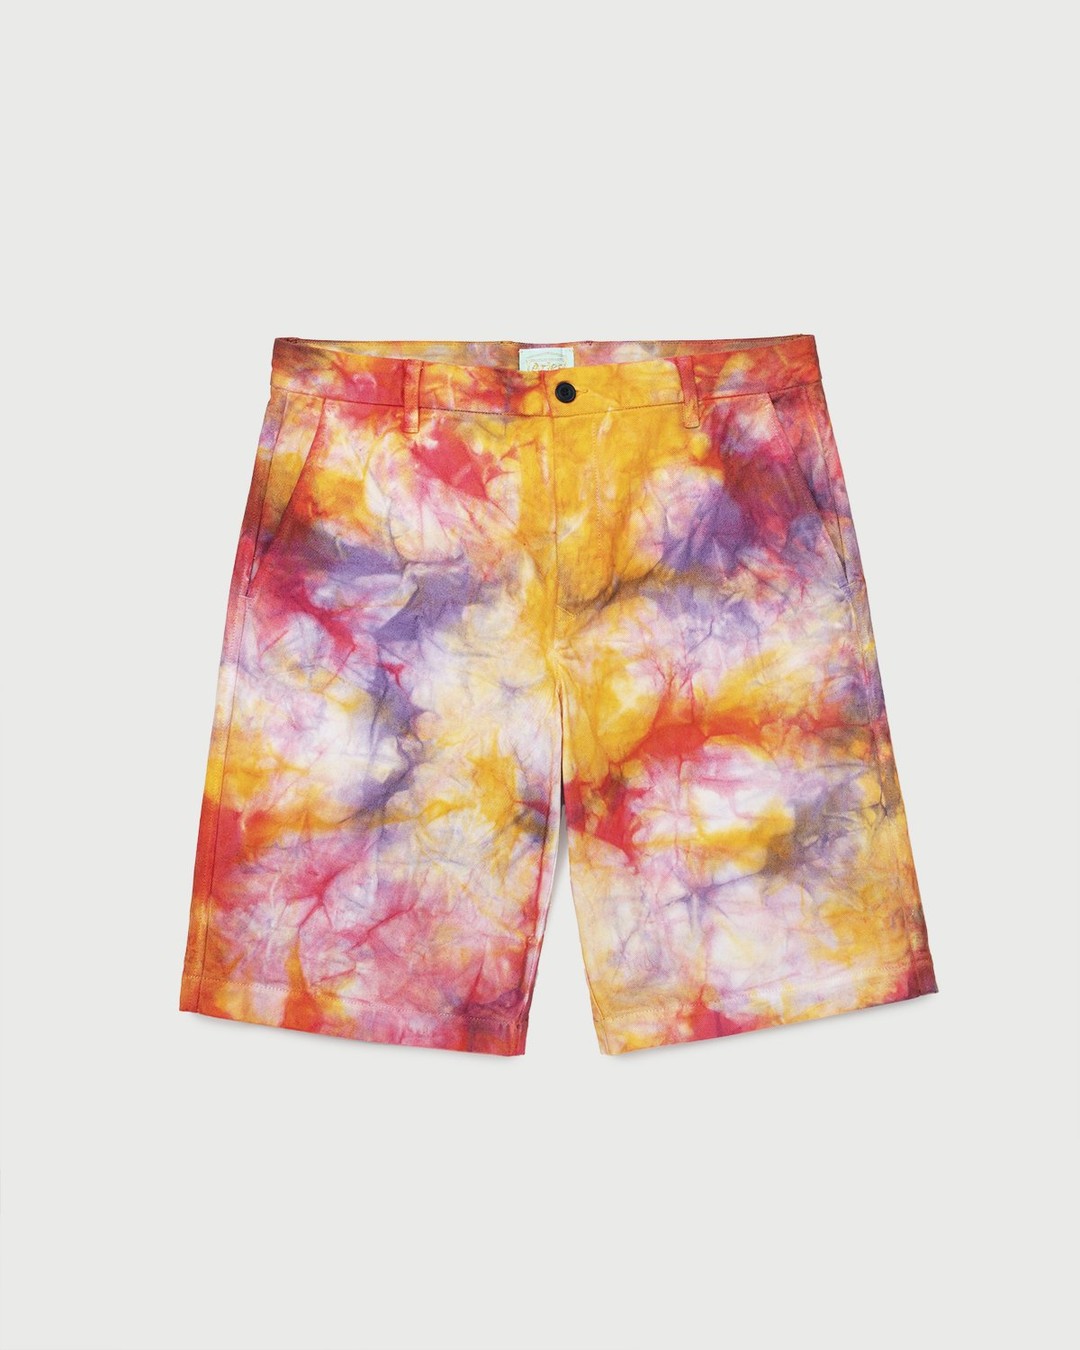 Aries – Tie Dye Chino Shorts Multicolor - Bermuda Cuts - Multi - Image 1